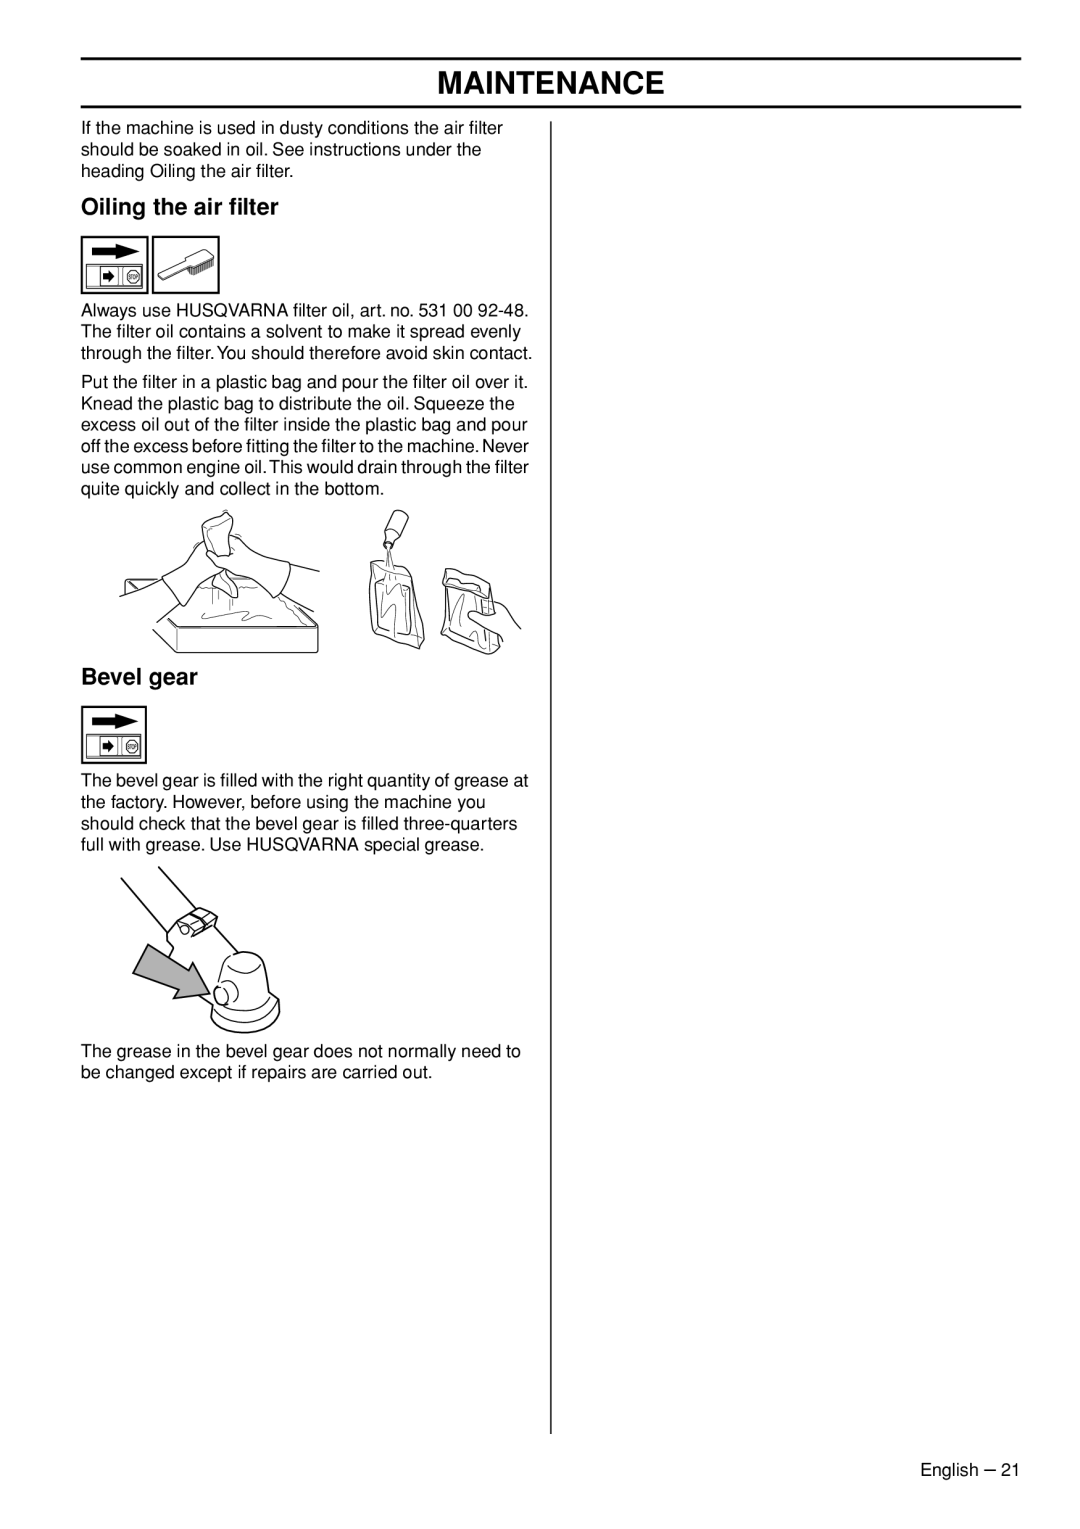 Husqvarna 1153286-26 manual Oiling the air ﬁlter, Bevel gear, Maintenance 